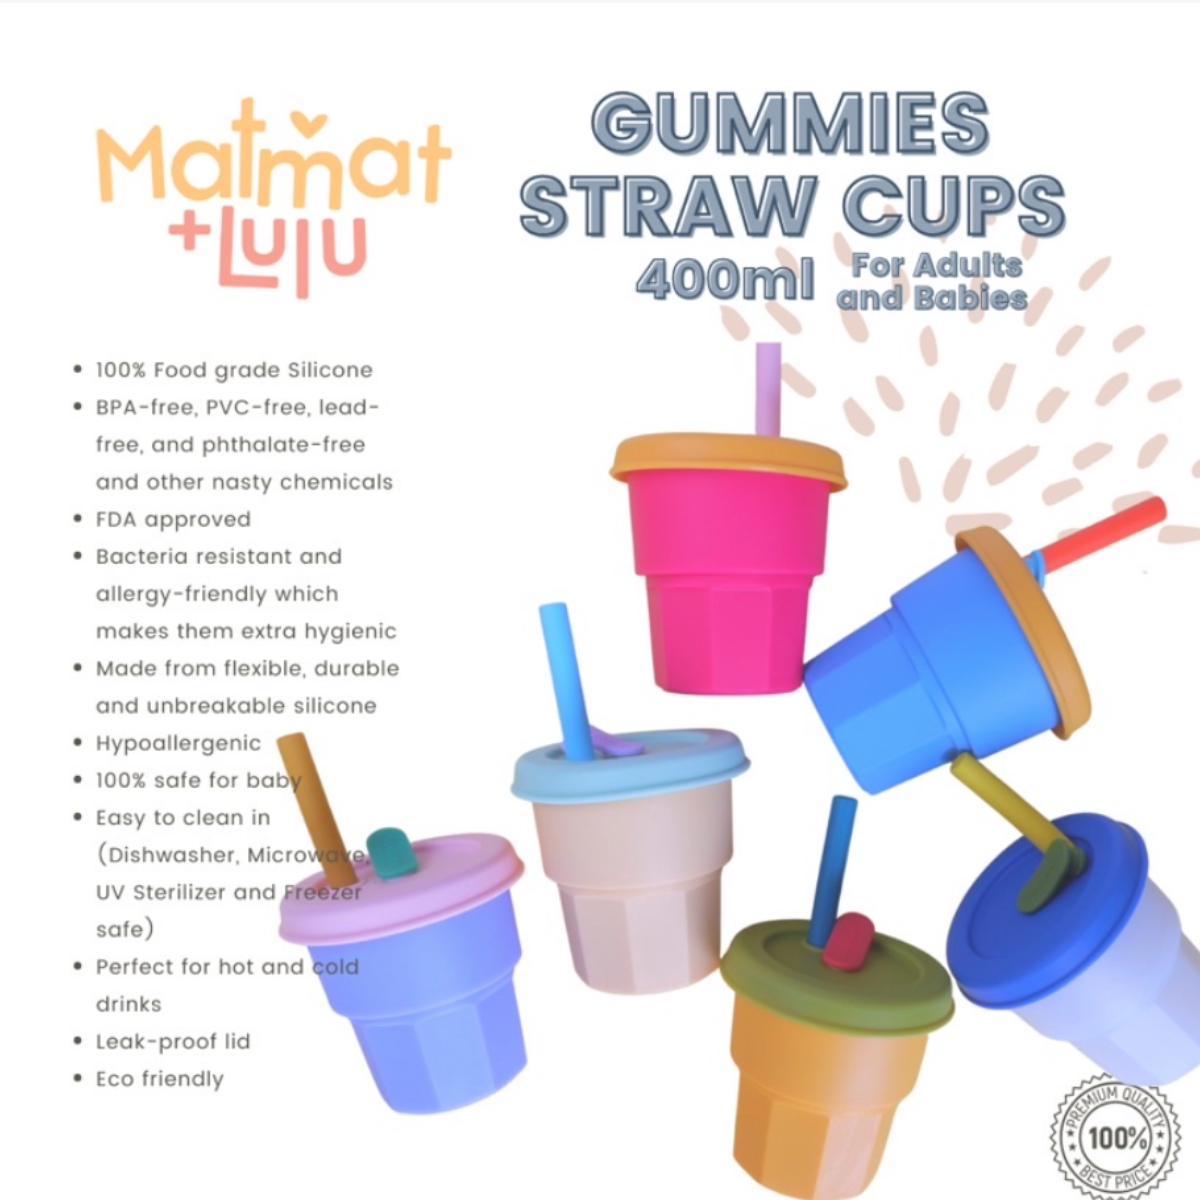 Matmat Lulu Gummies Straw Cups 400ml